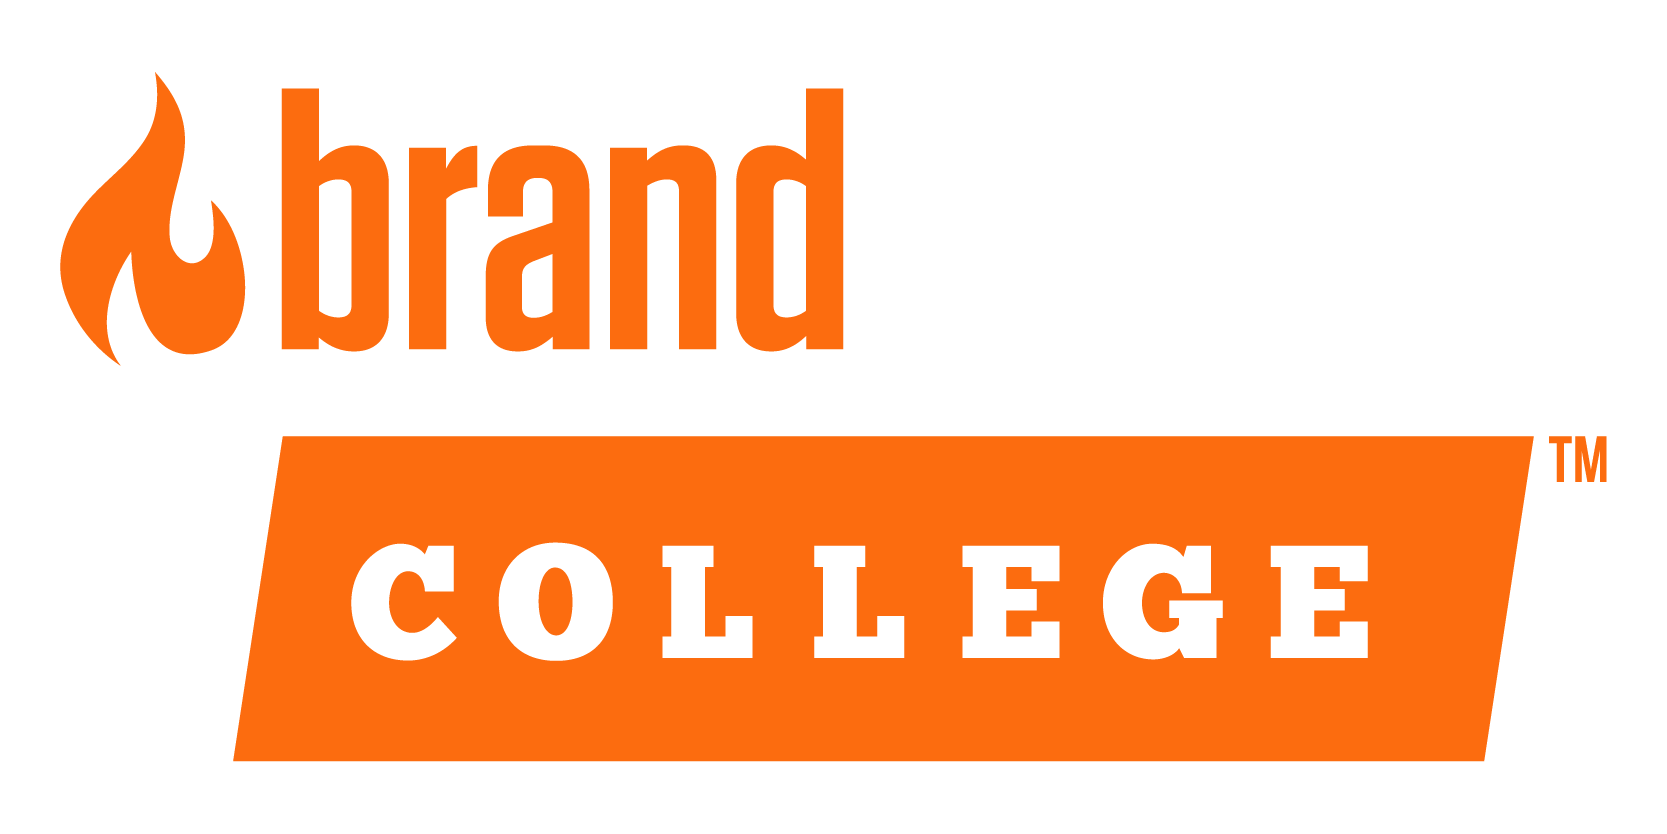 BrandComply College